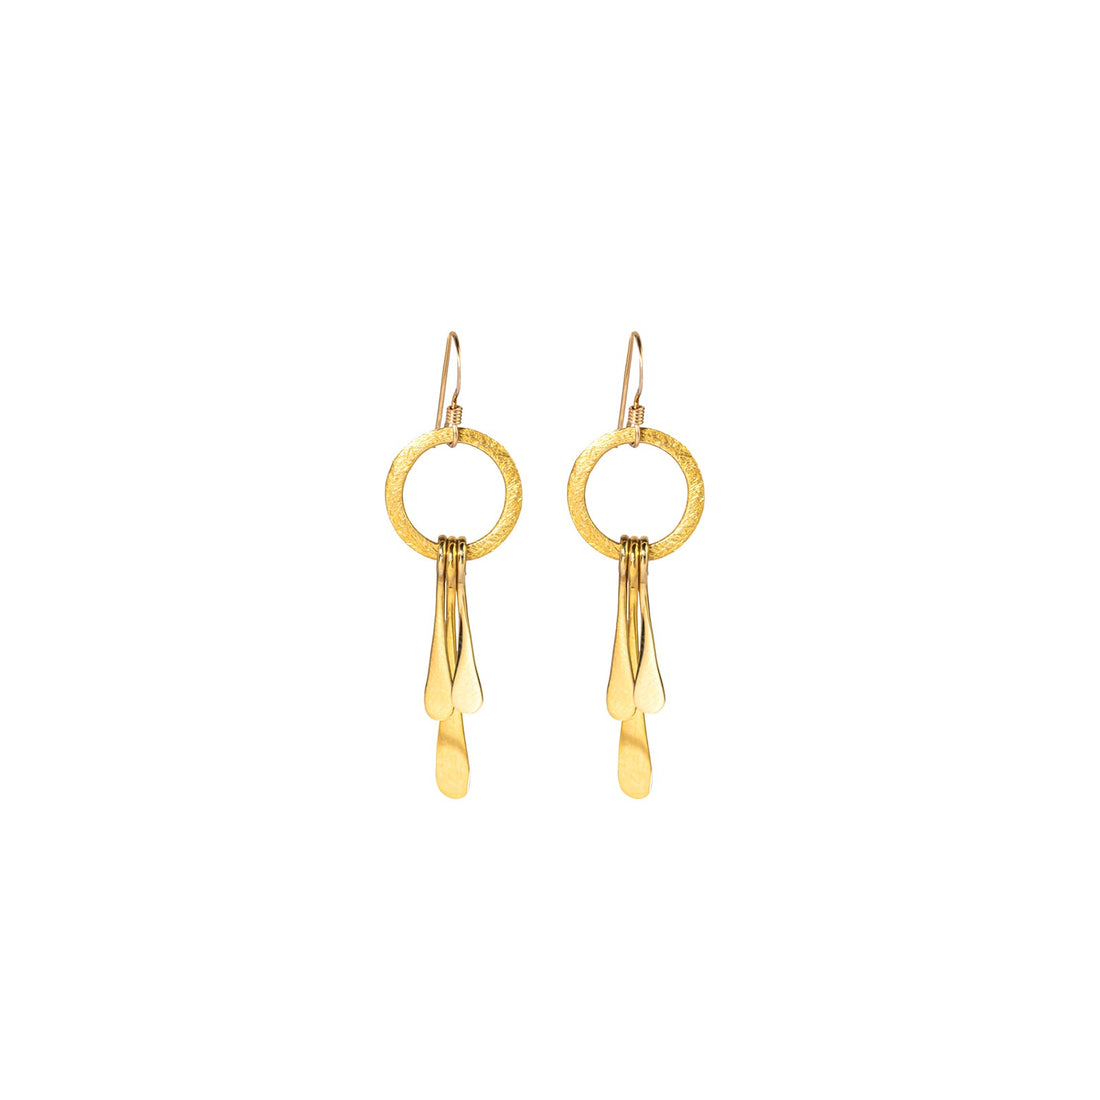 Mini Anabelle Earrings in Gold Earrings Sayulita Sol Jewelry 